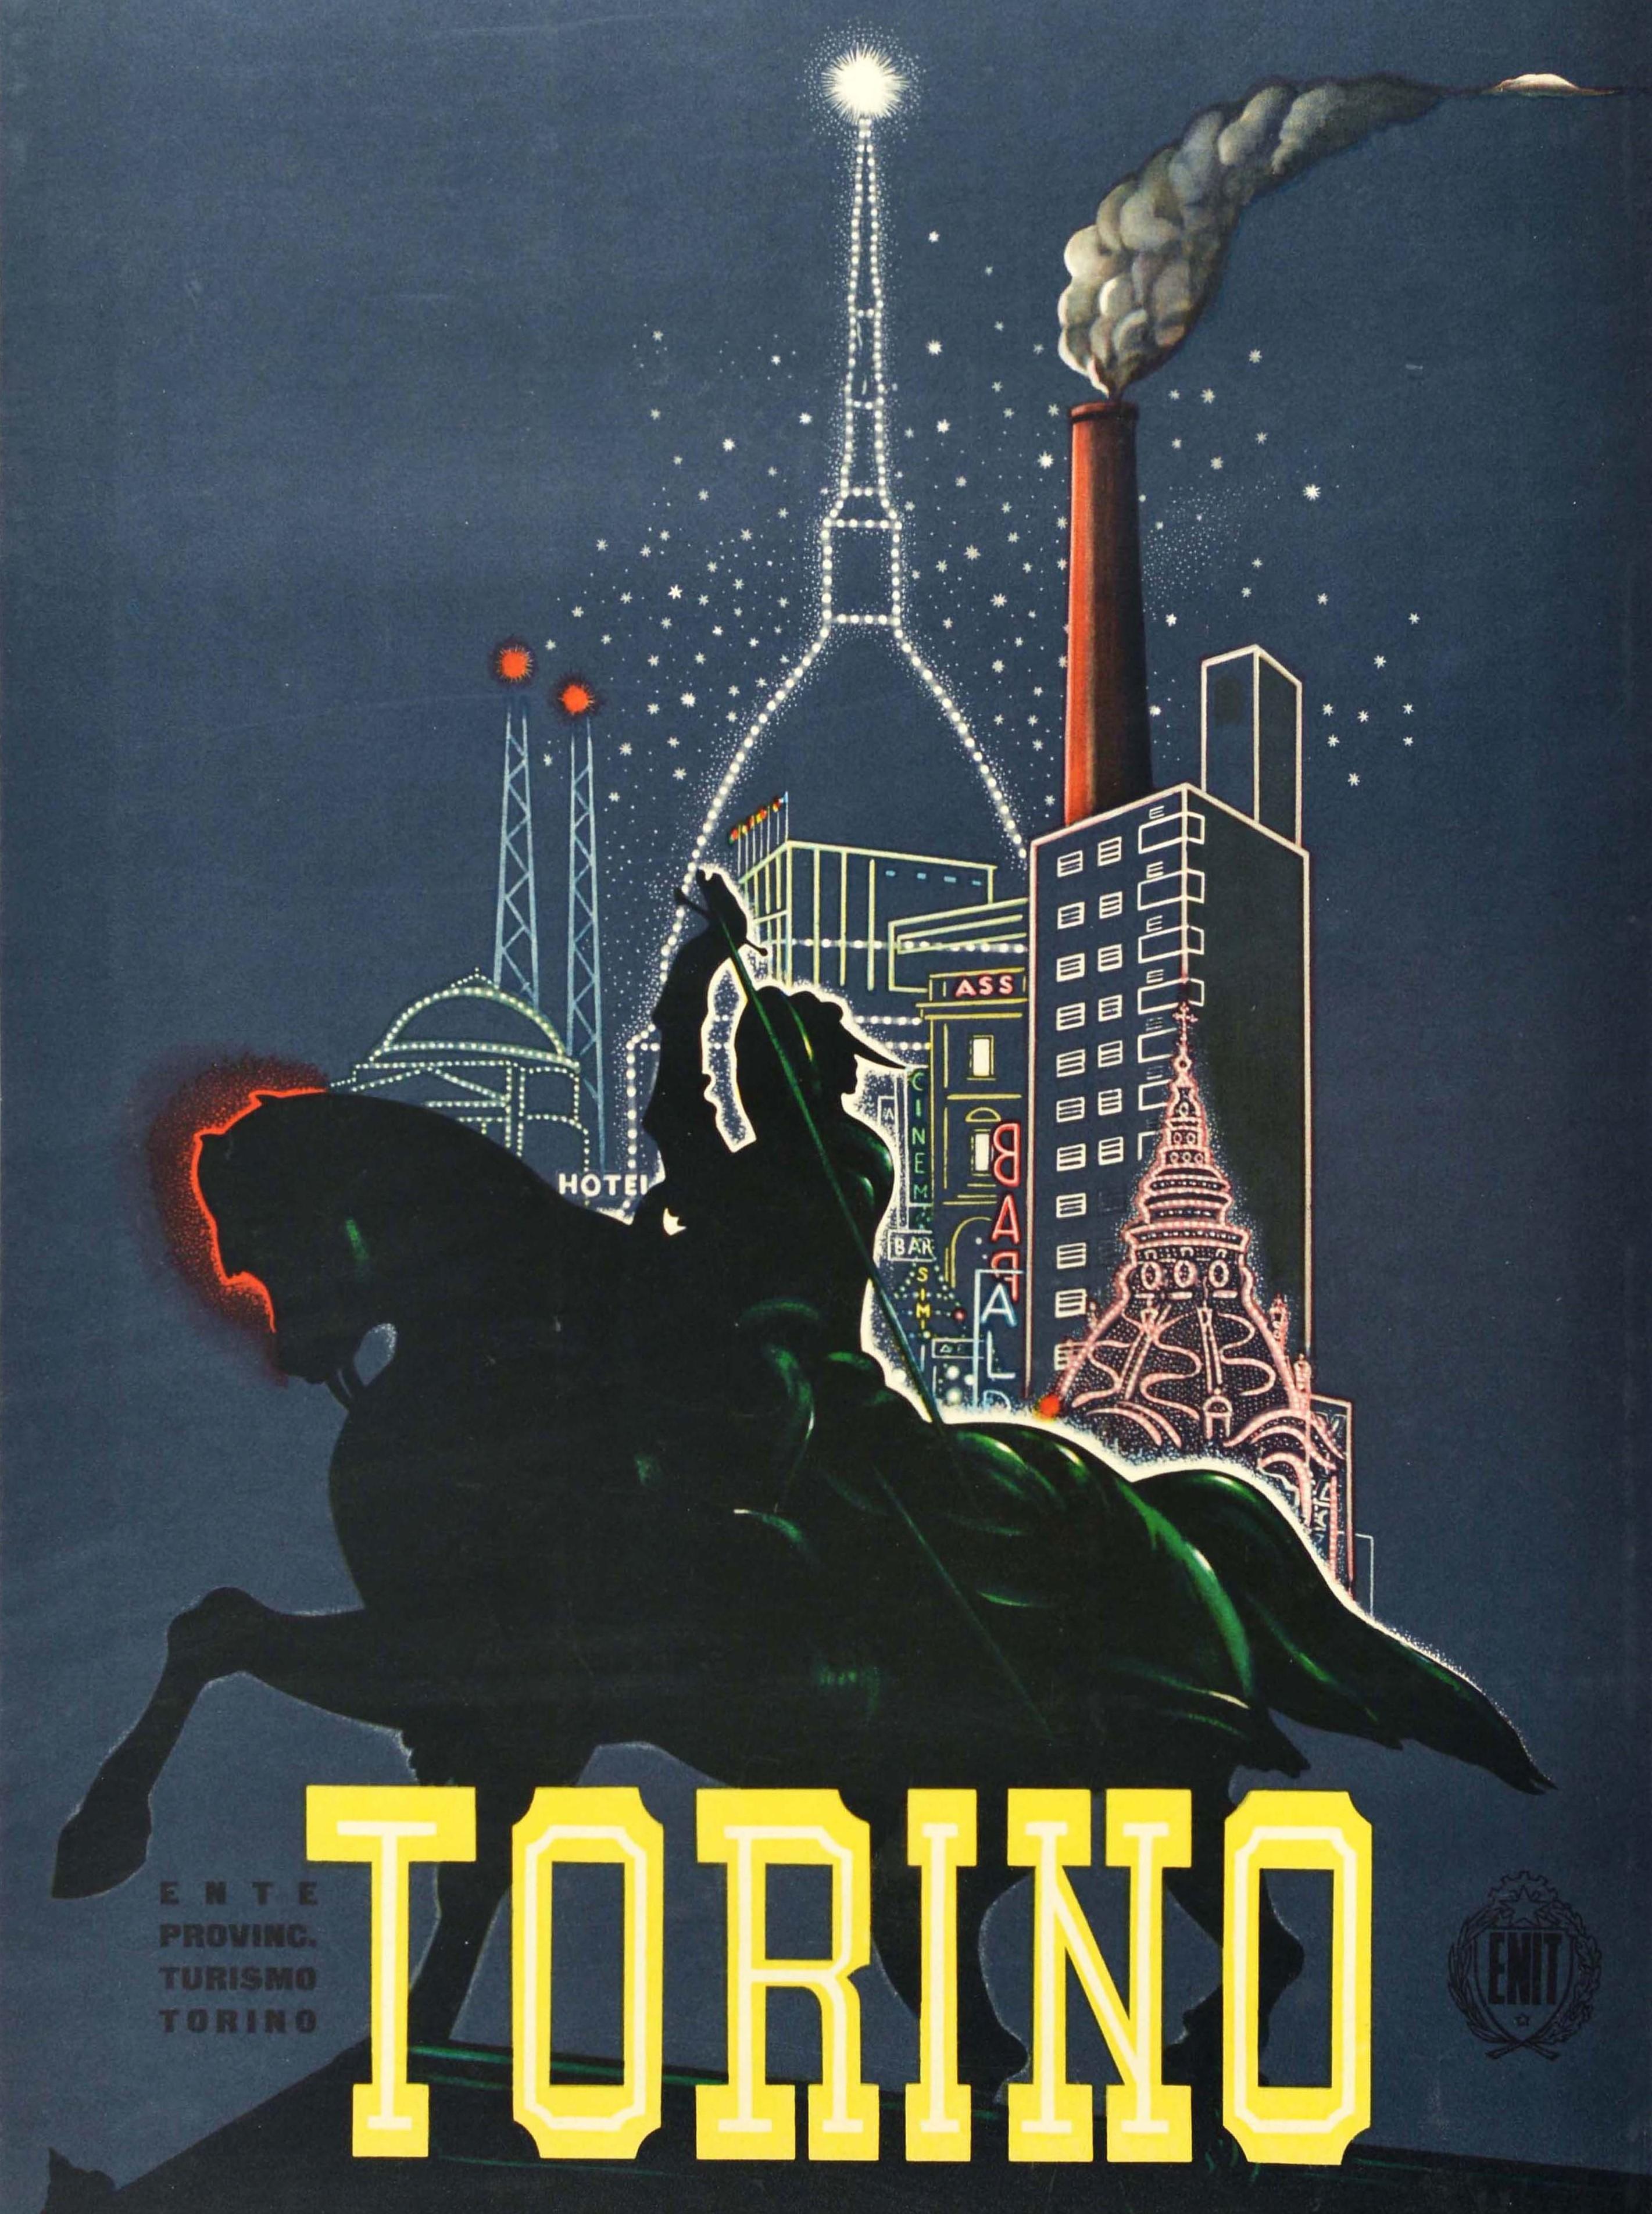 italian retro posters